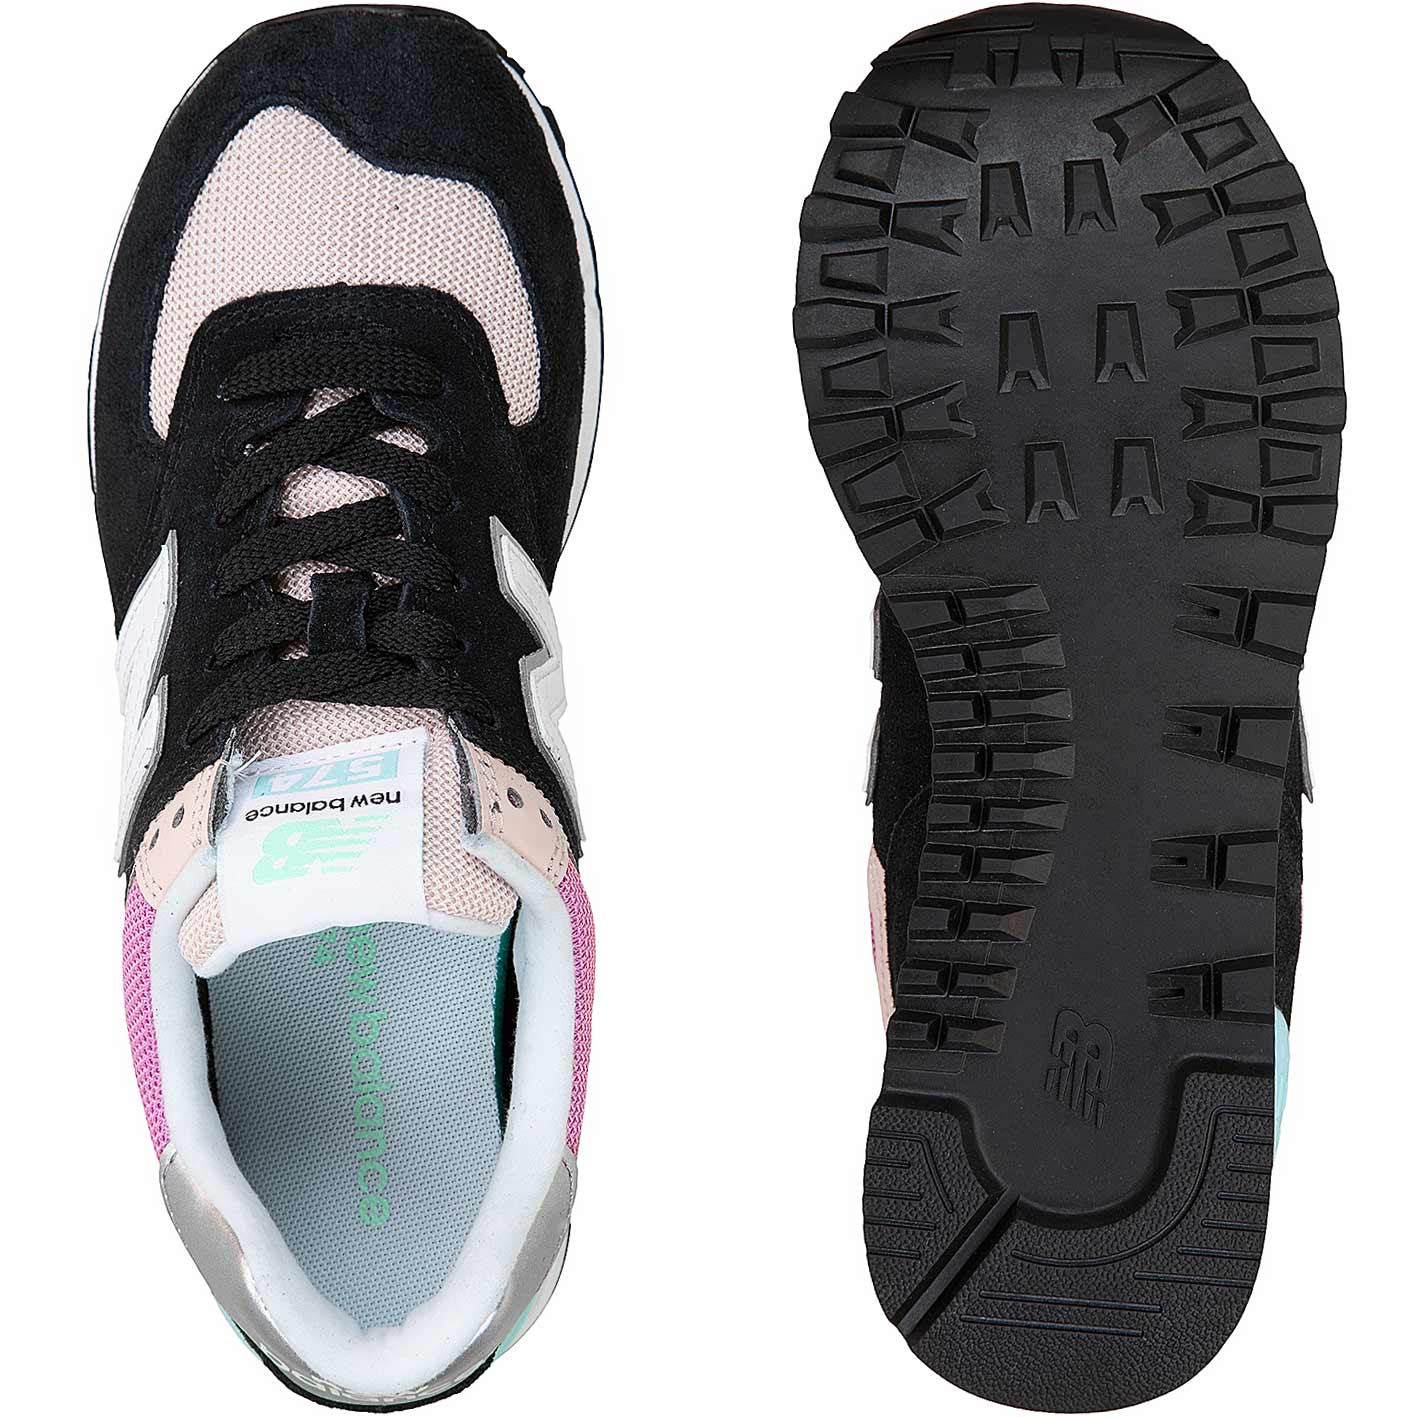 ☆ New Balance Damen Sneaker 574 schwarz - hier bestellen!